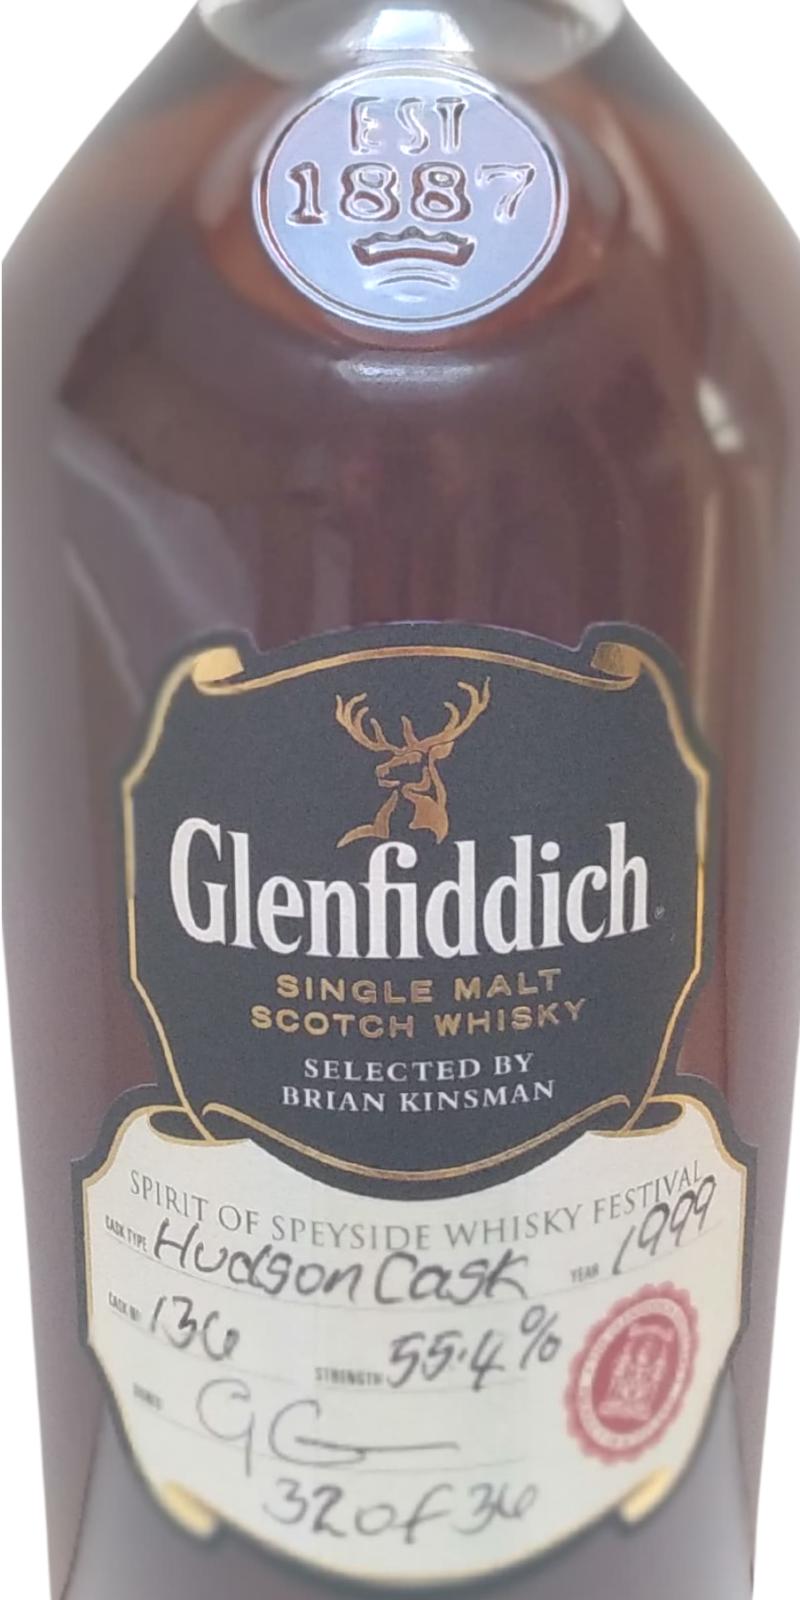 Glenfiddich 1999 - Hudson Cask No.136